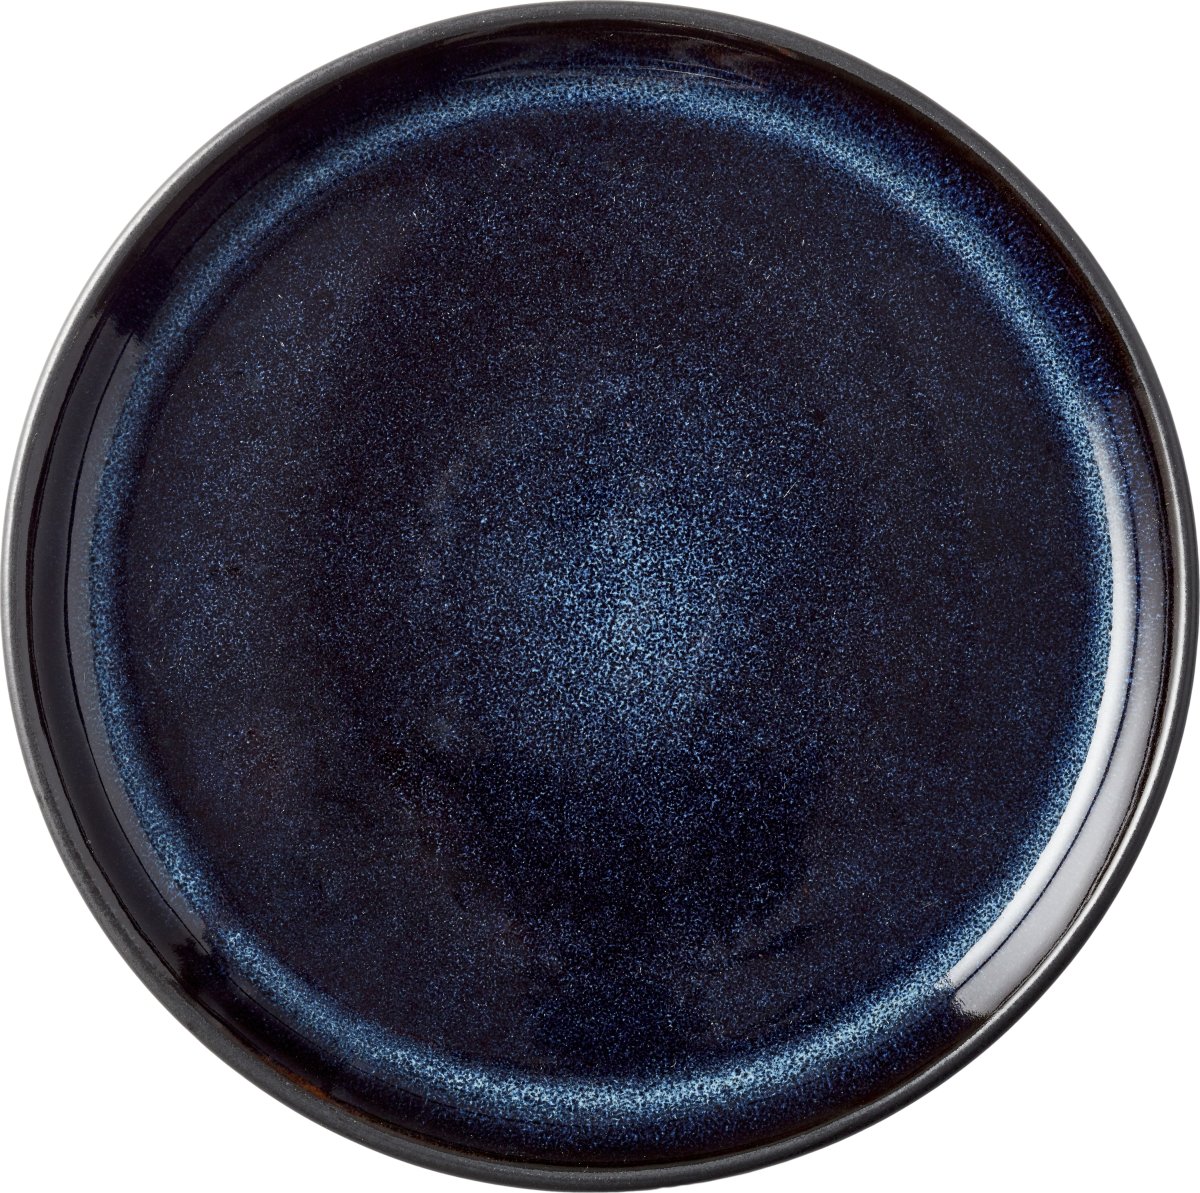 Bitz Gastro tallerken sort/blå, Ø 17 cm